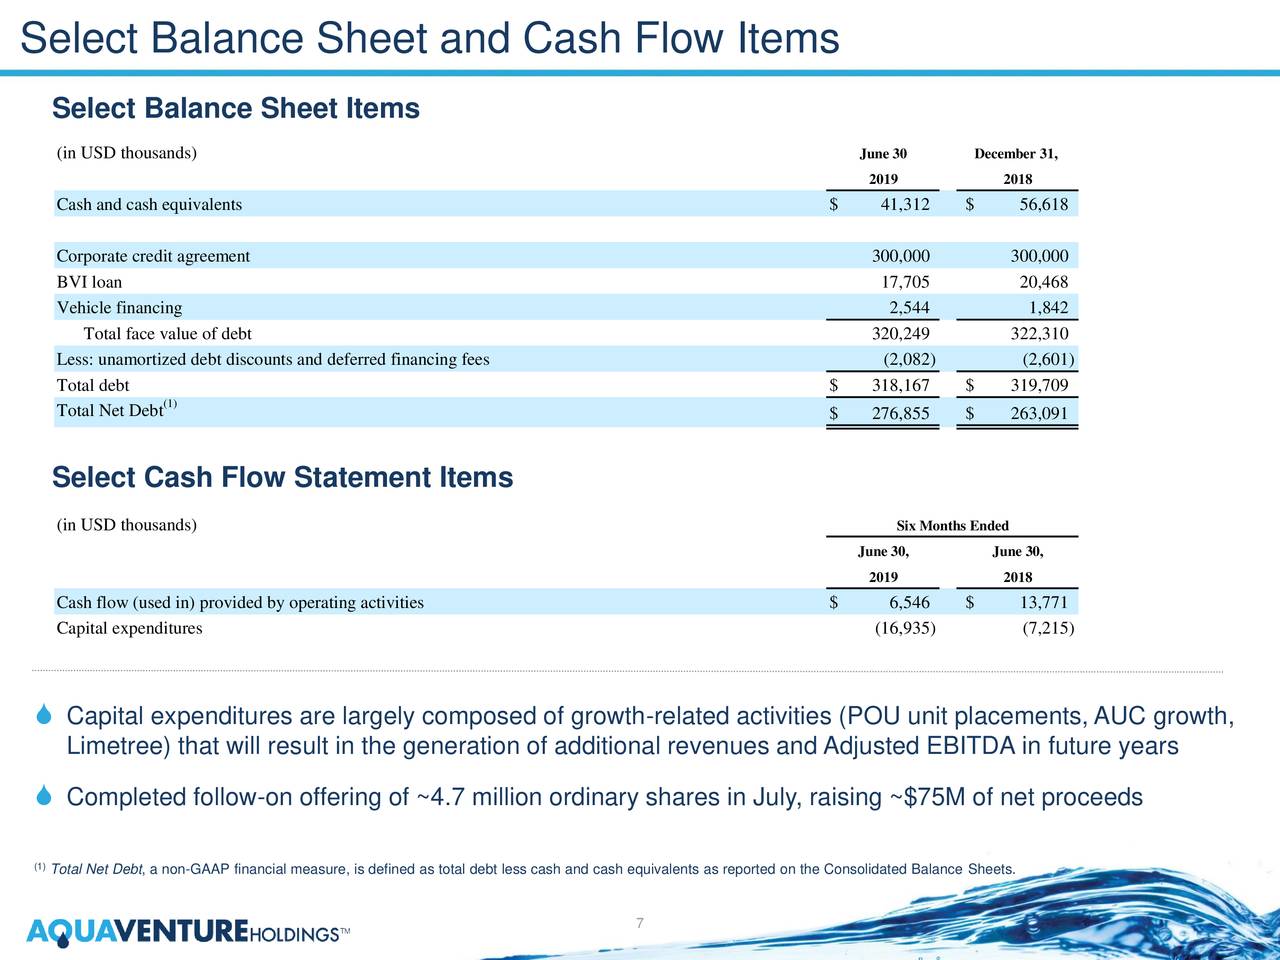 Select Balance Sheet and Cash Flow Items